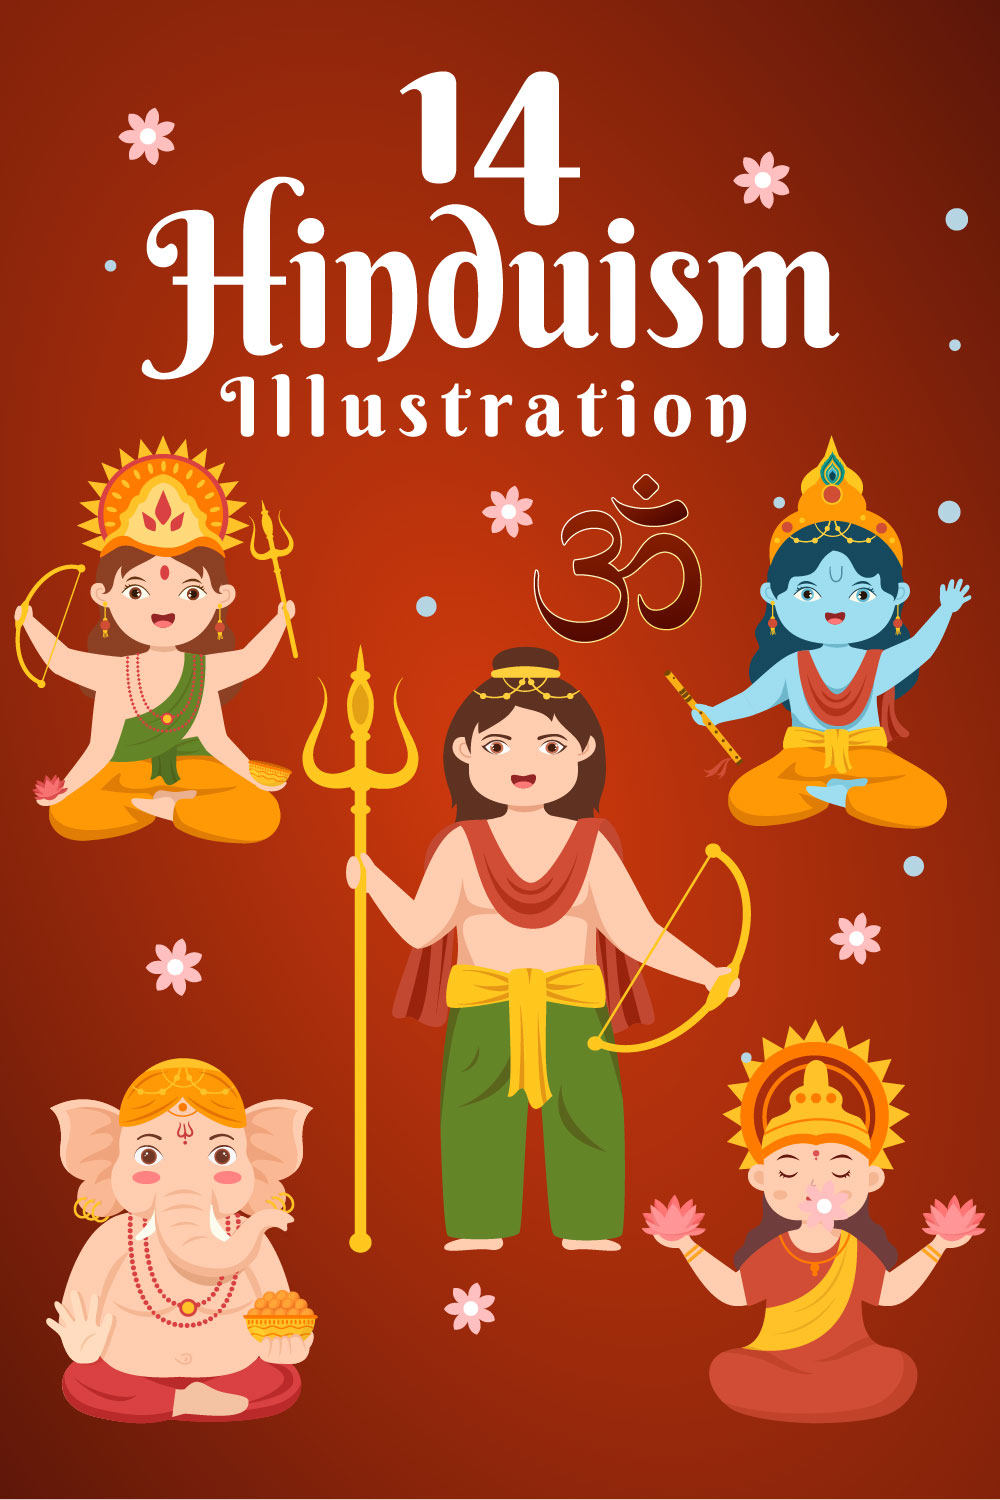 Hinduism of Indian Illustration pinterest image.